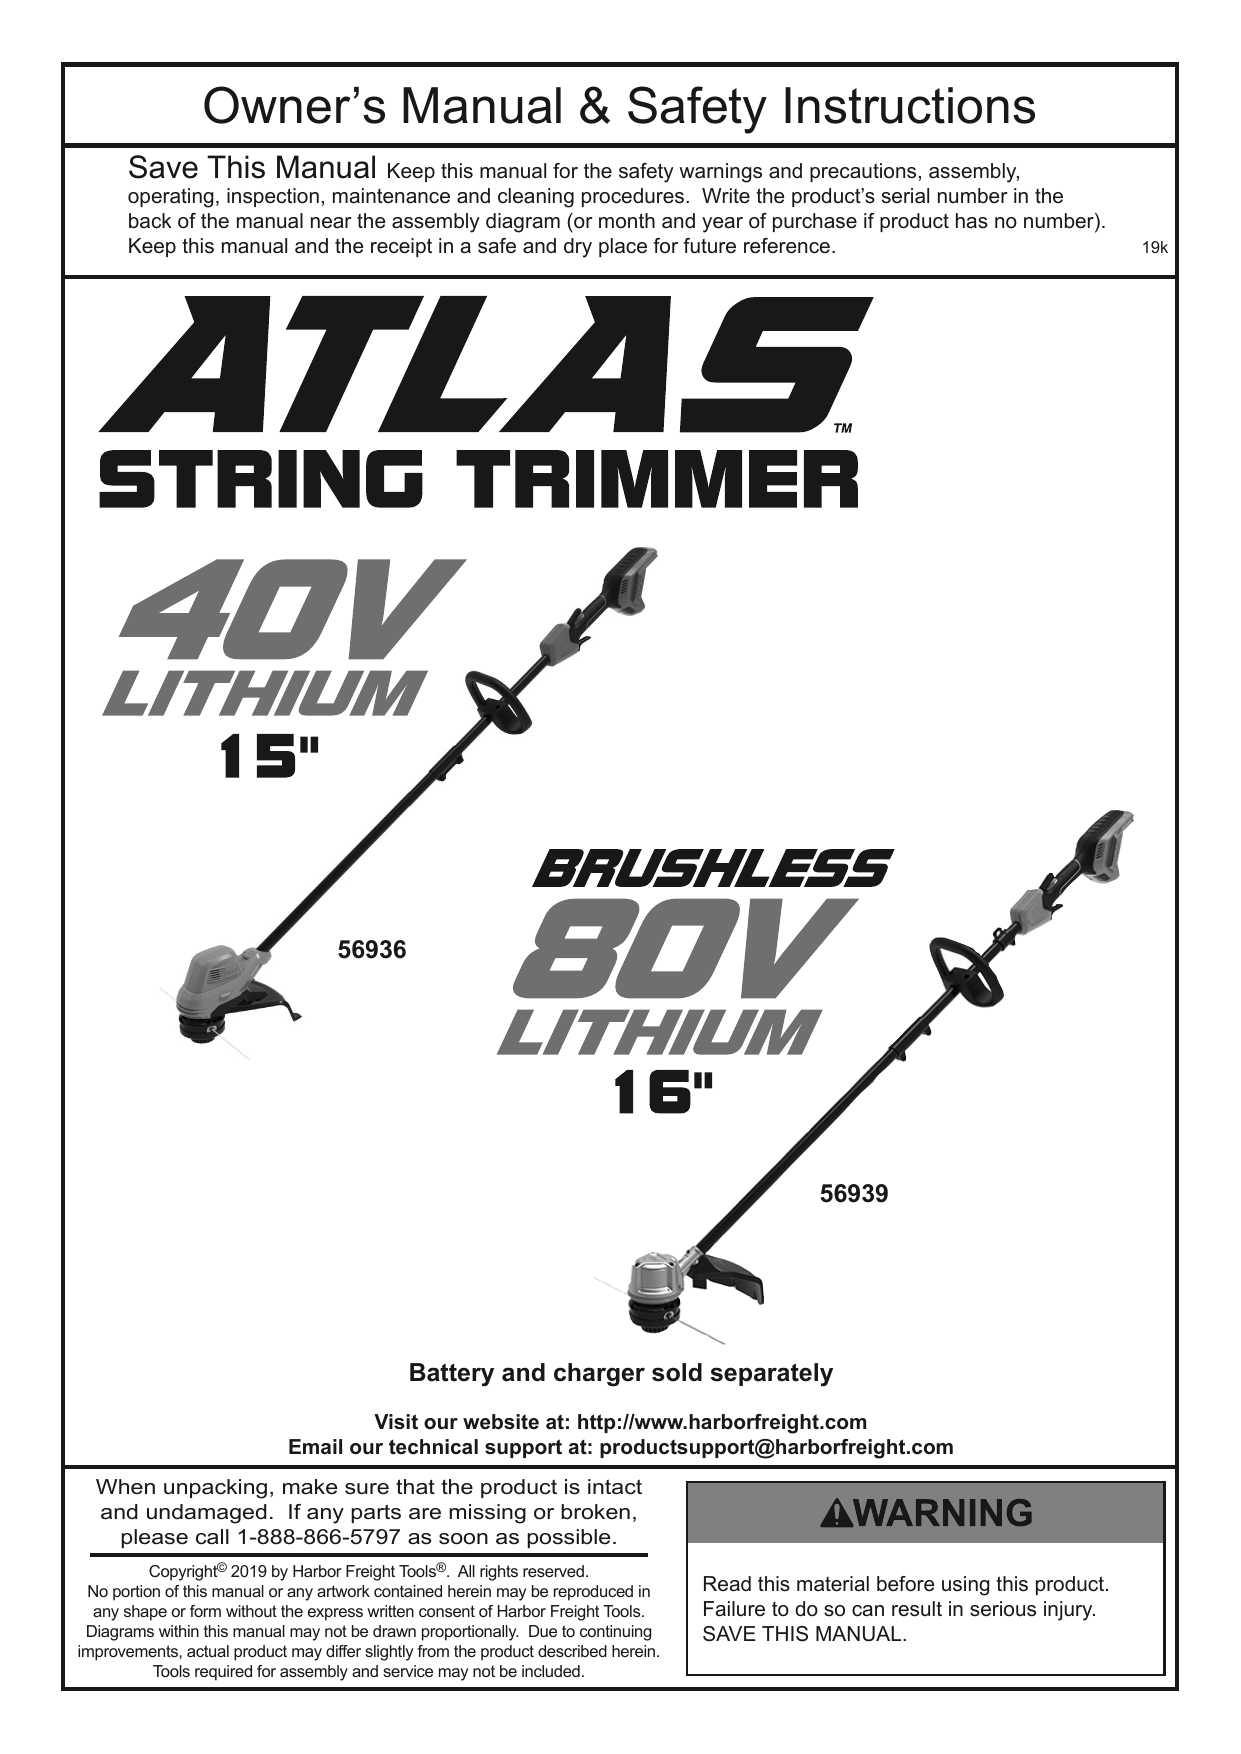 lynxx 40v lithium cordless string trimmer 64714